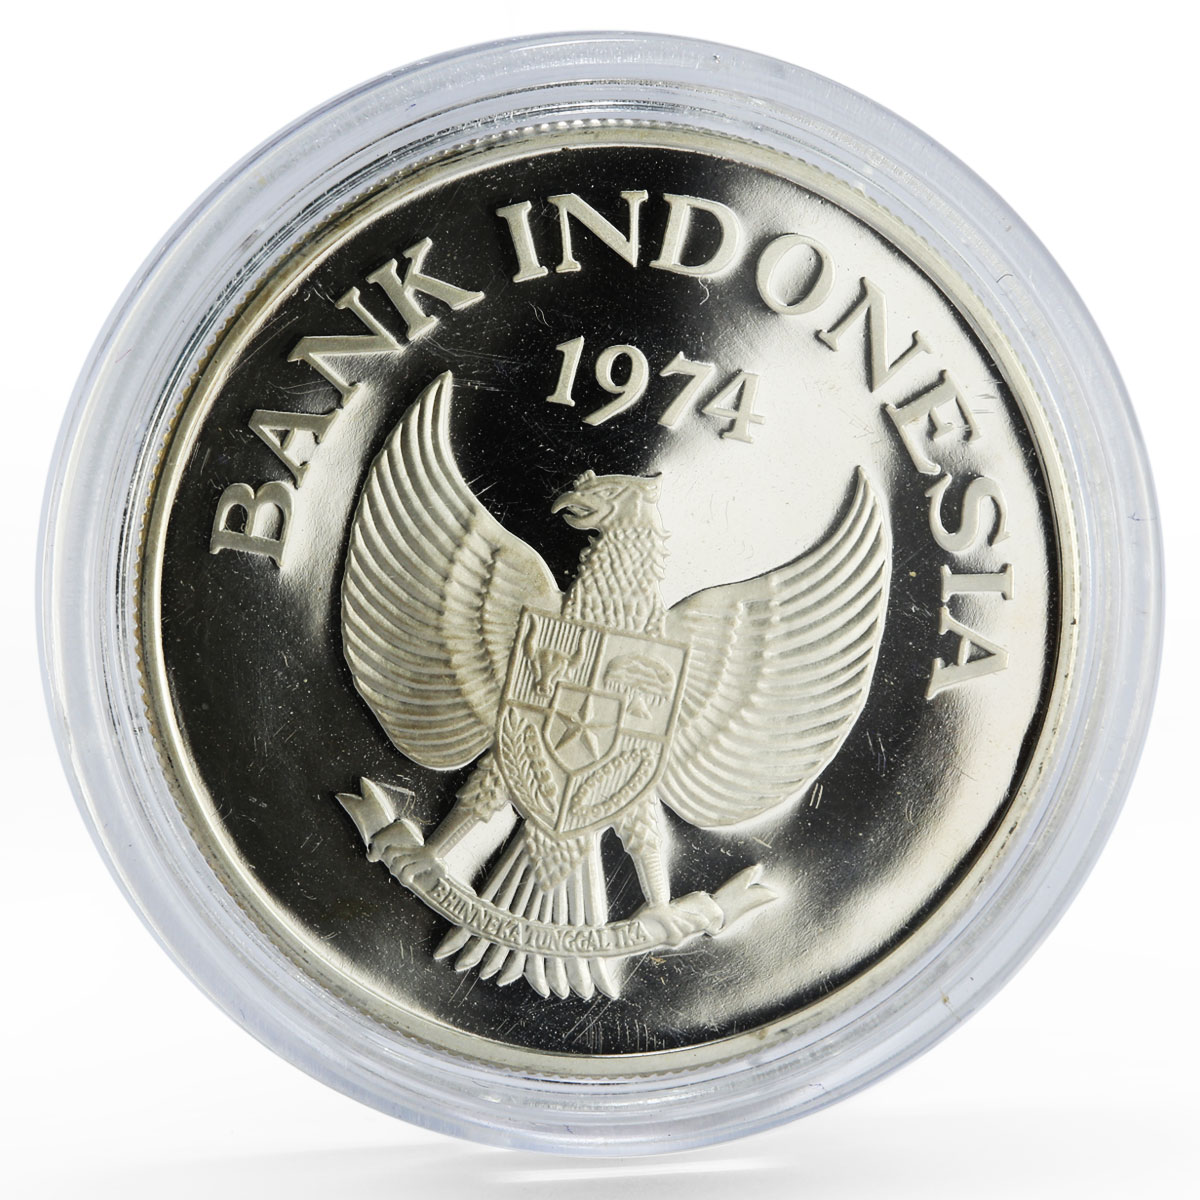 Indonesia 2000 rupiah Javan Tiger proof silver coin 1974